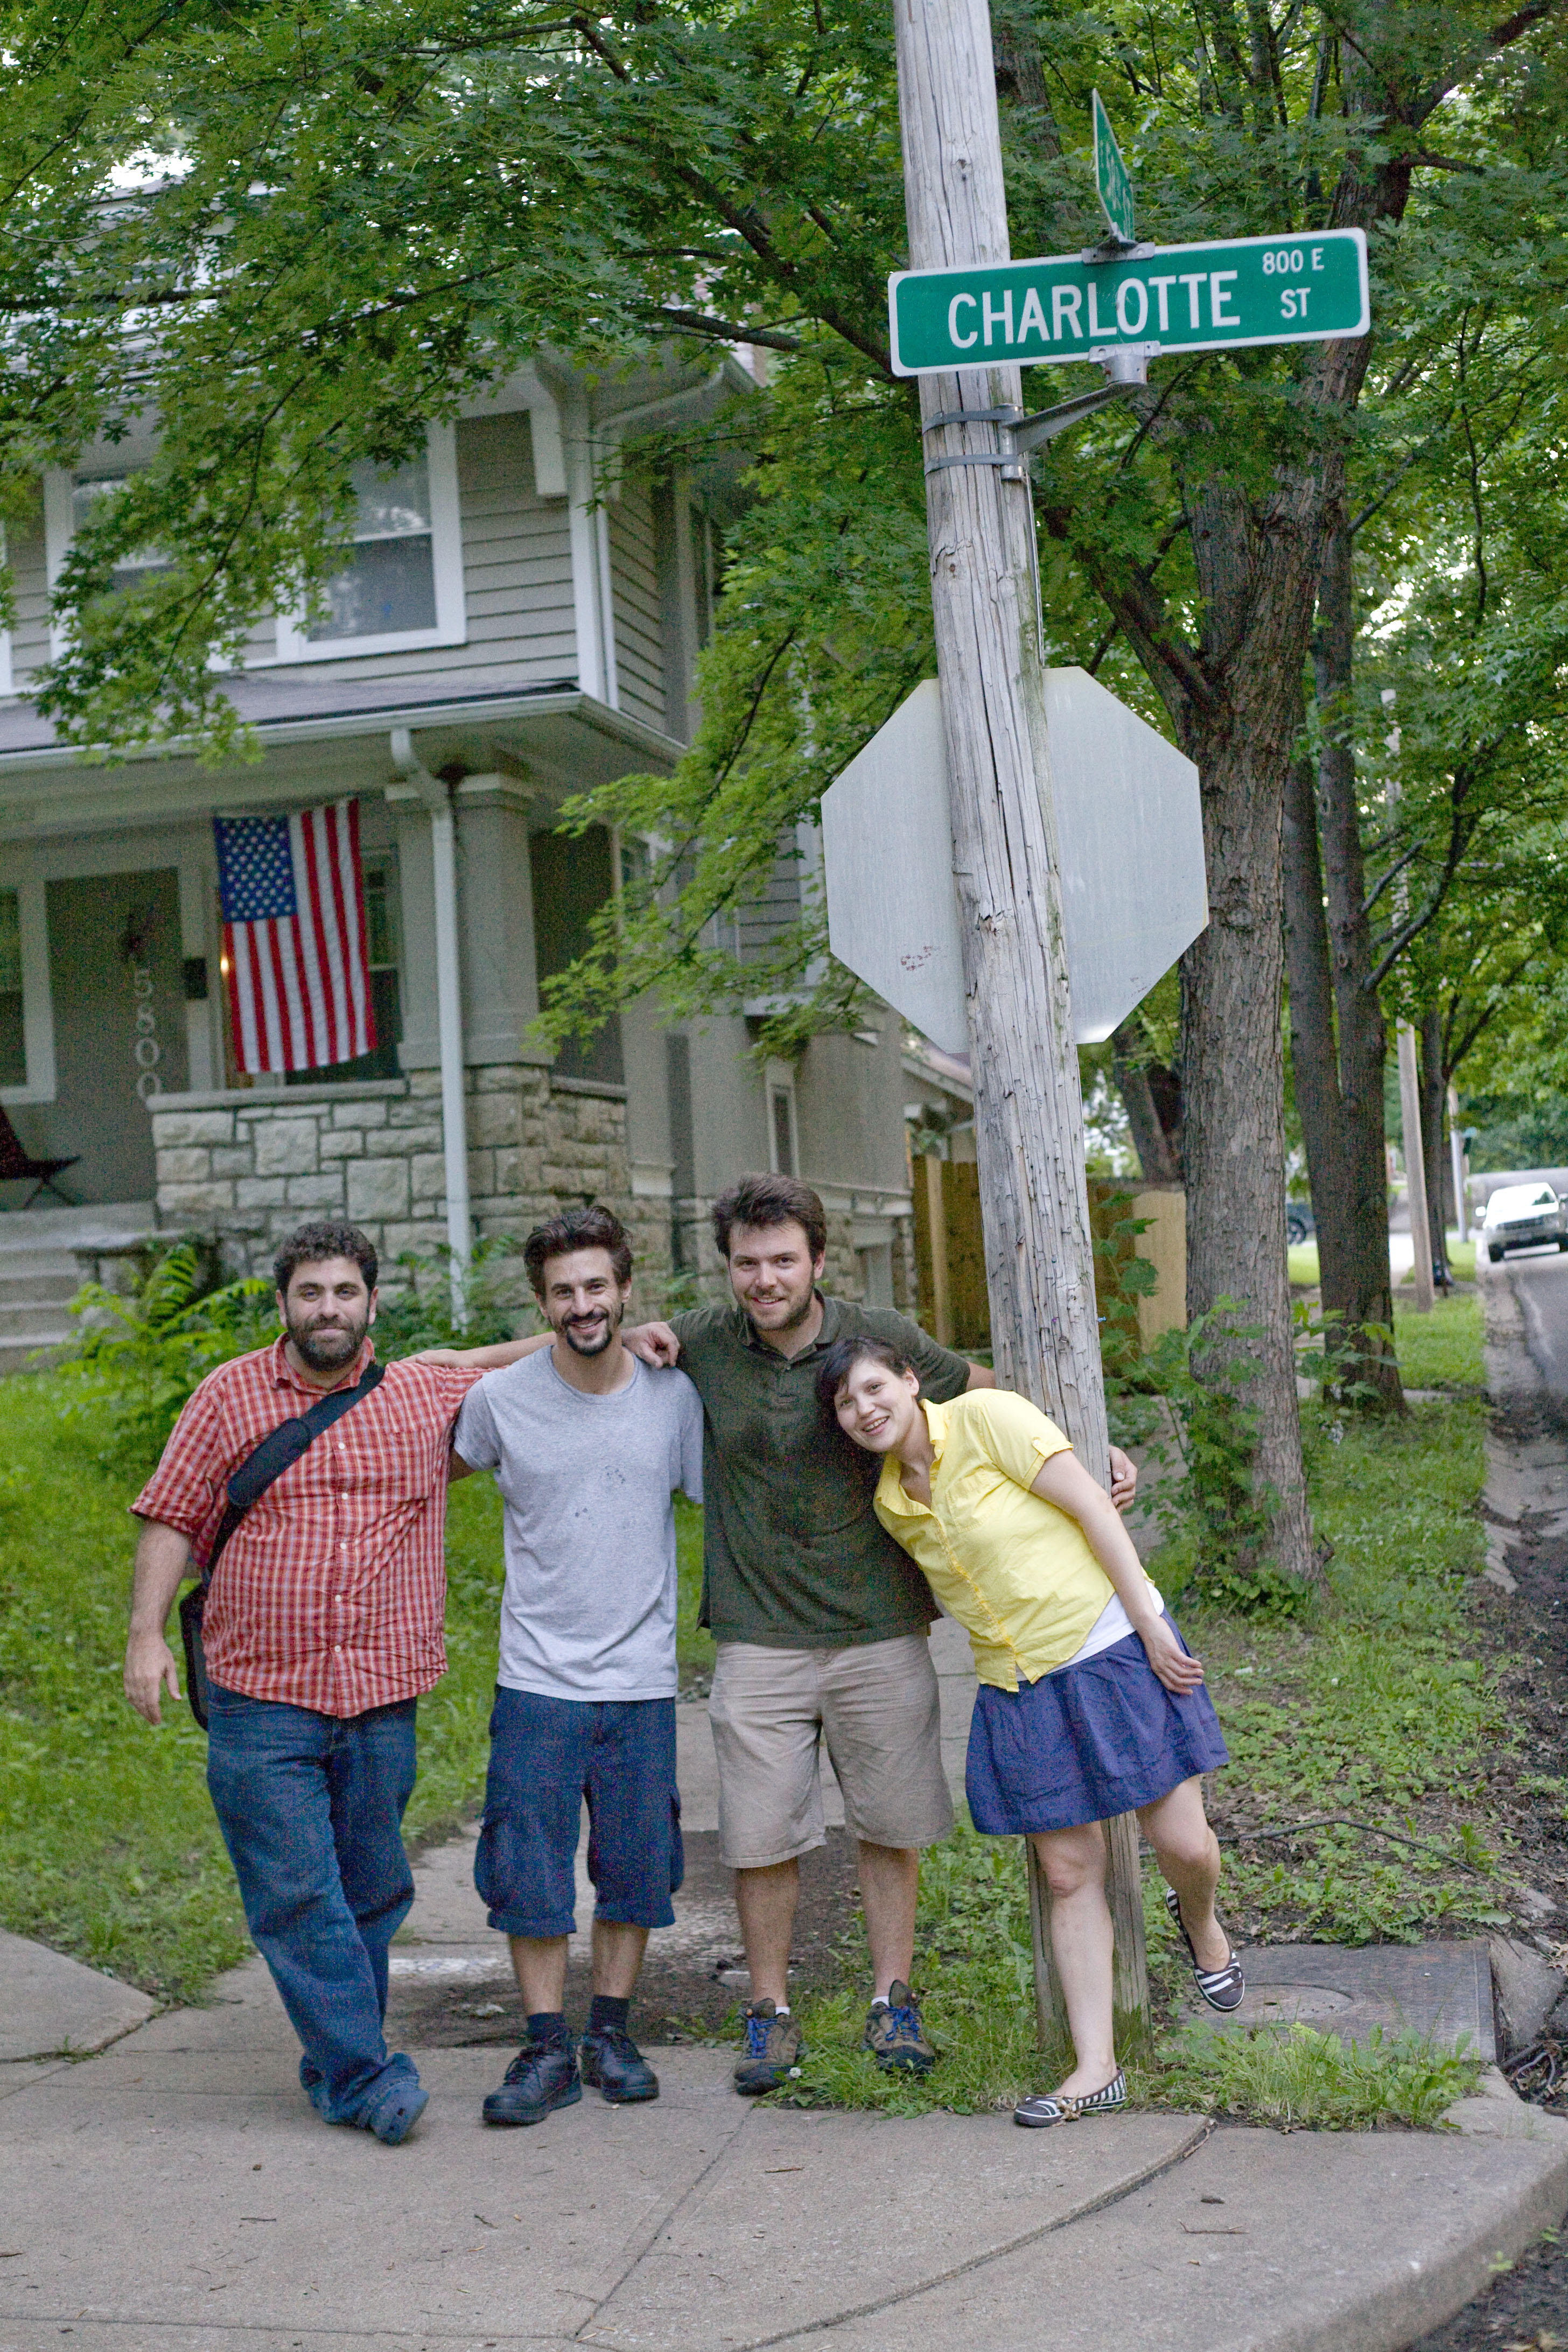 On location, Charlotte Street, Kansas City MO. From left to right, Eugene Jarecki, Sam Cullman, Derek Hallquist and Melinda Shopsin